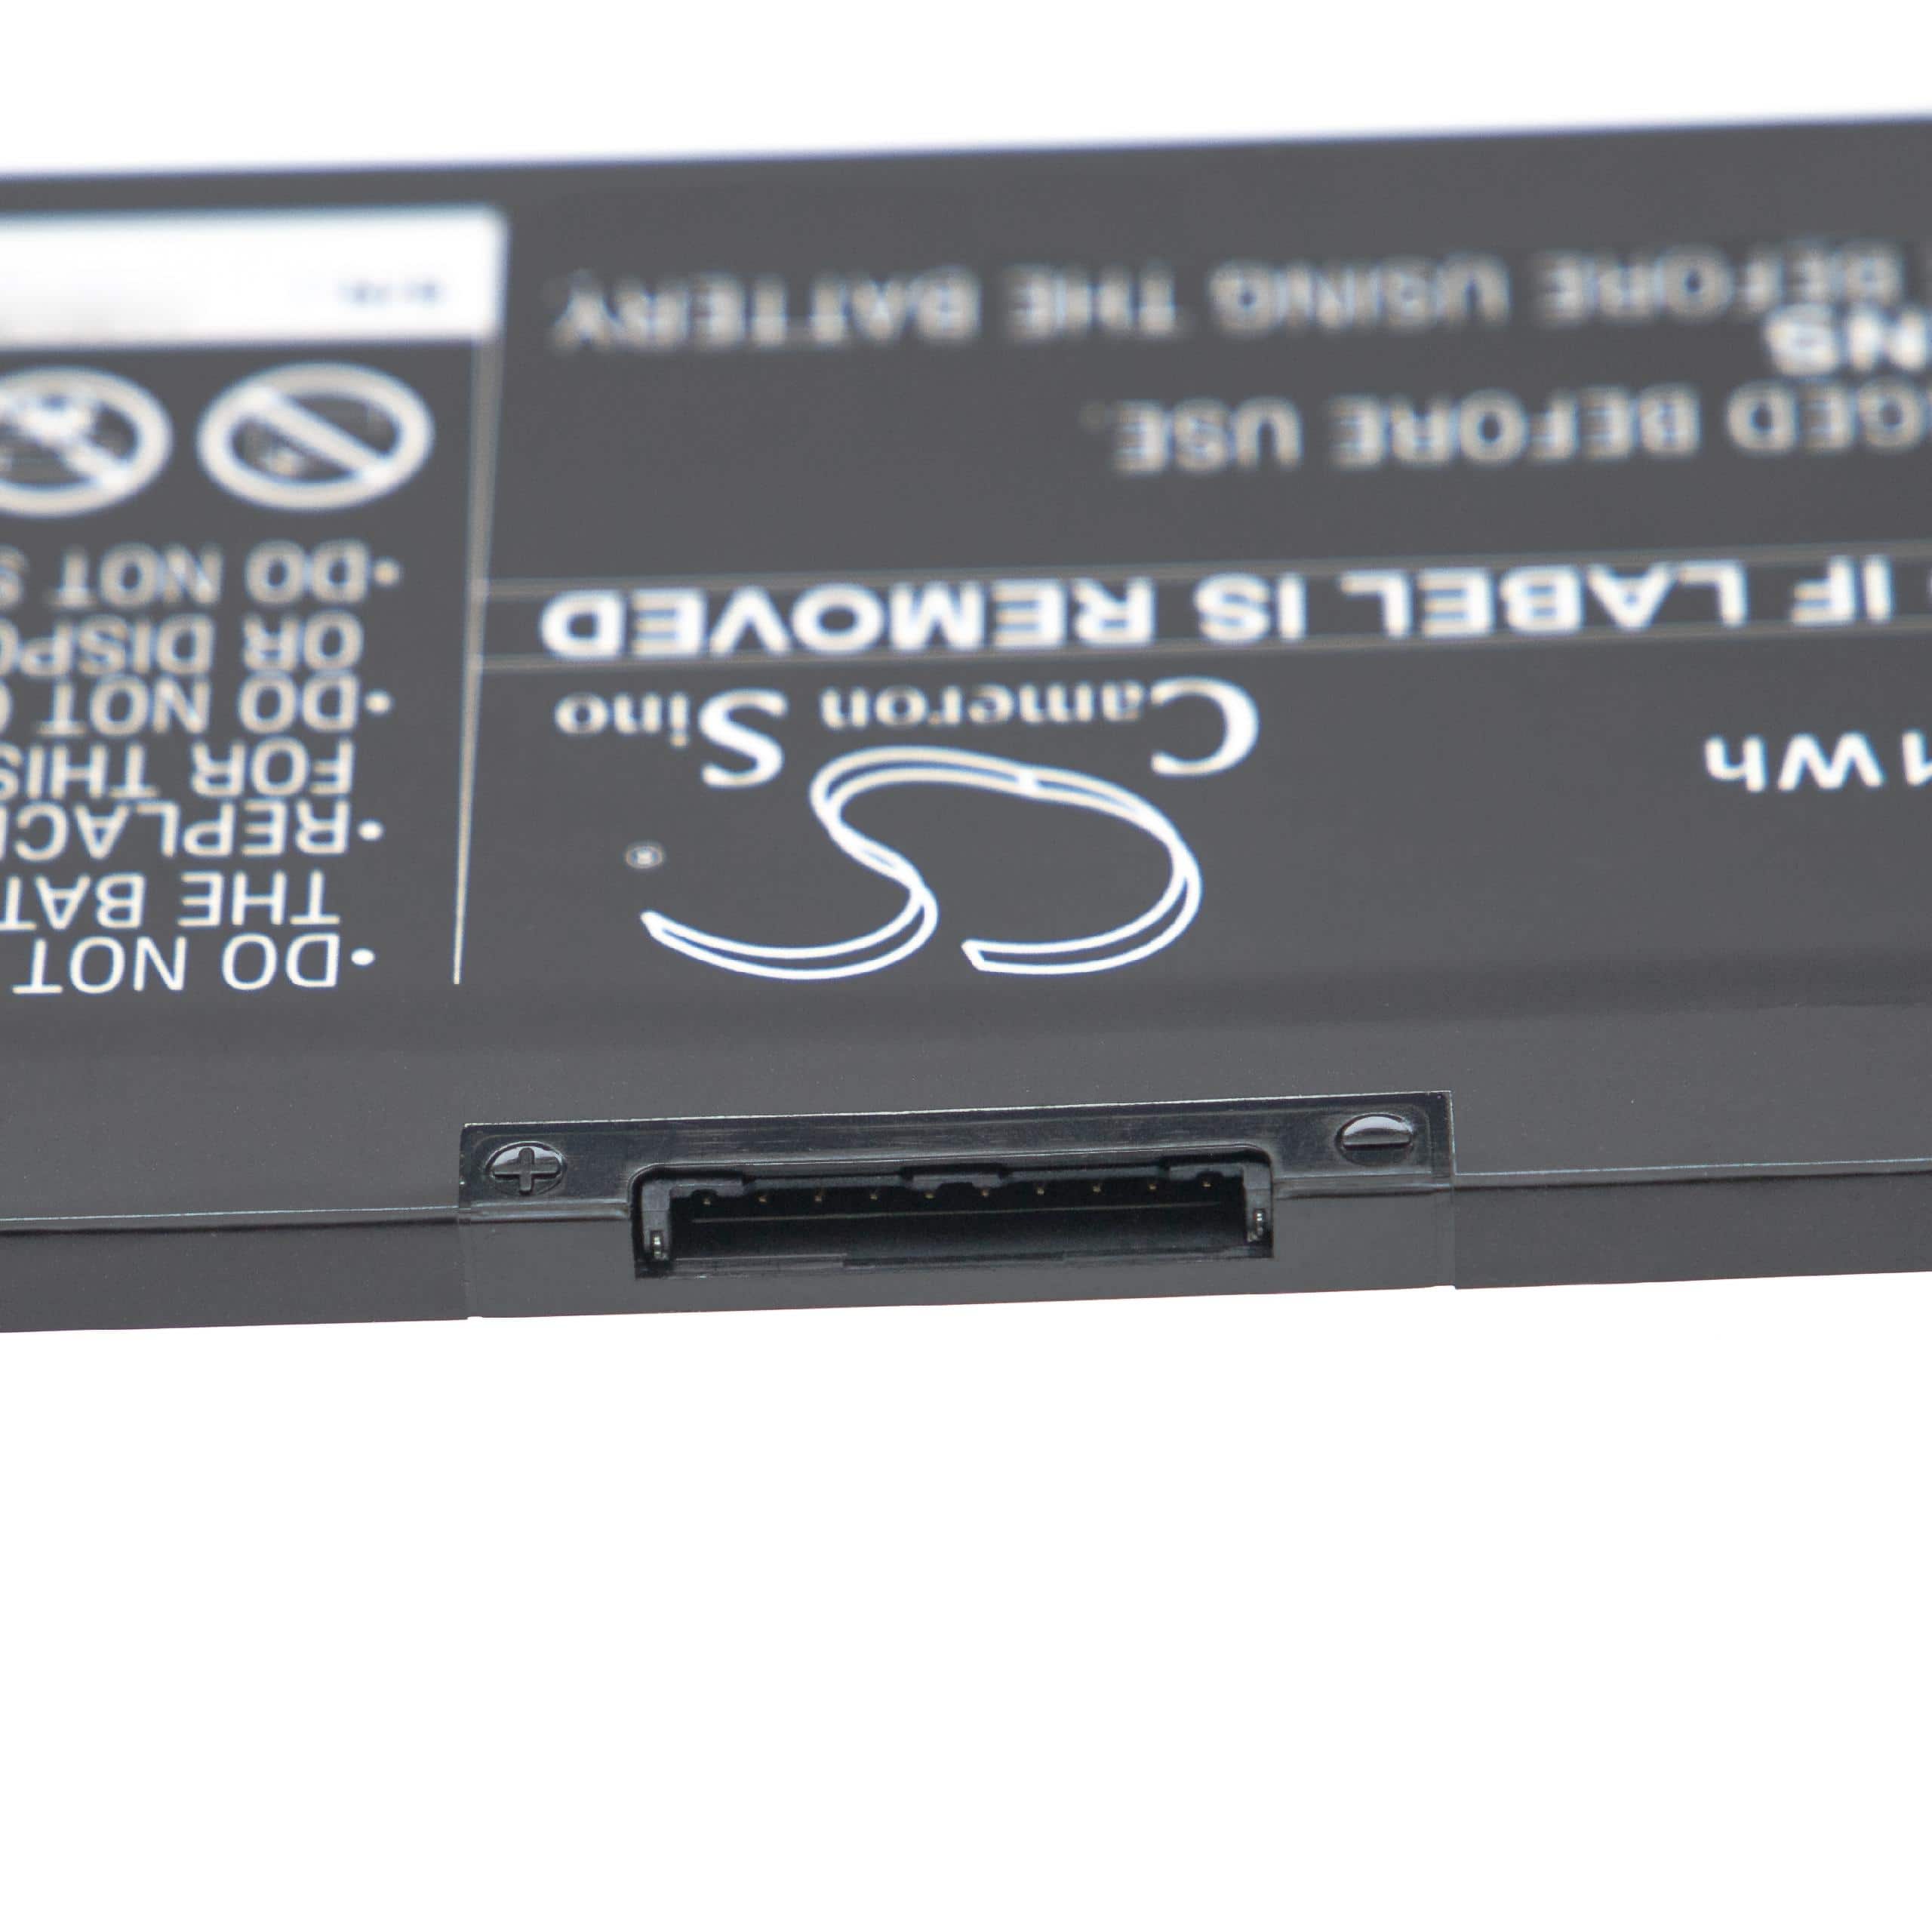 Akumulator do laptopa zamiennik Dell DVG8M, P8P1P, 8FCTC, 266J9, M4GWP - 4150 mAh 11,4 V LiPo